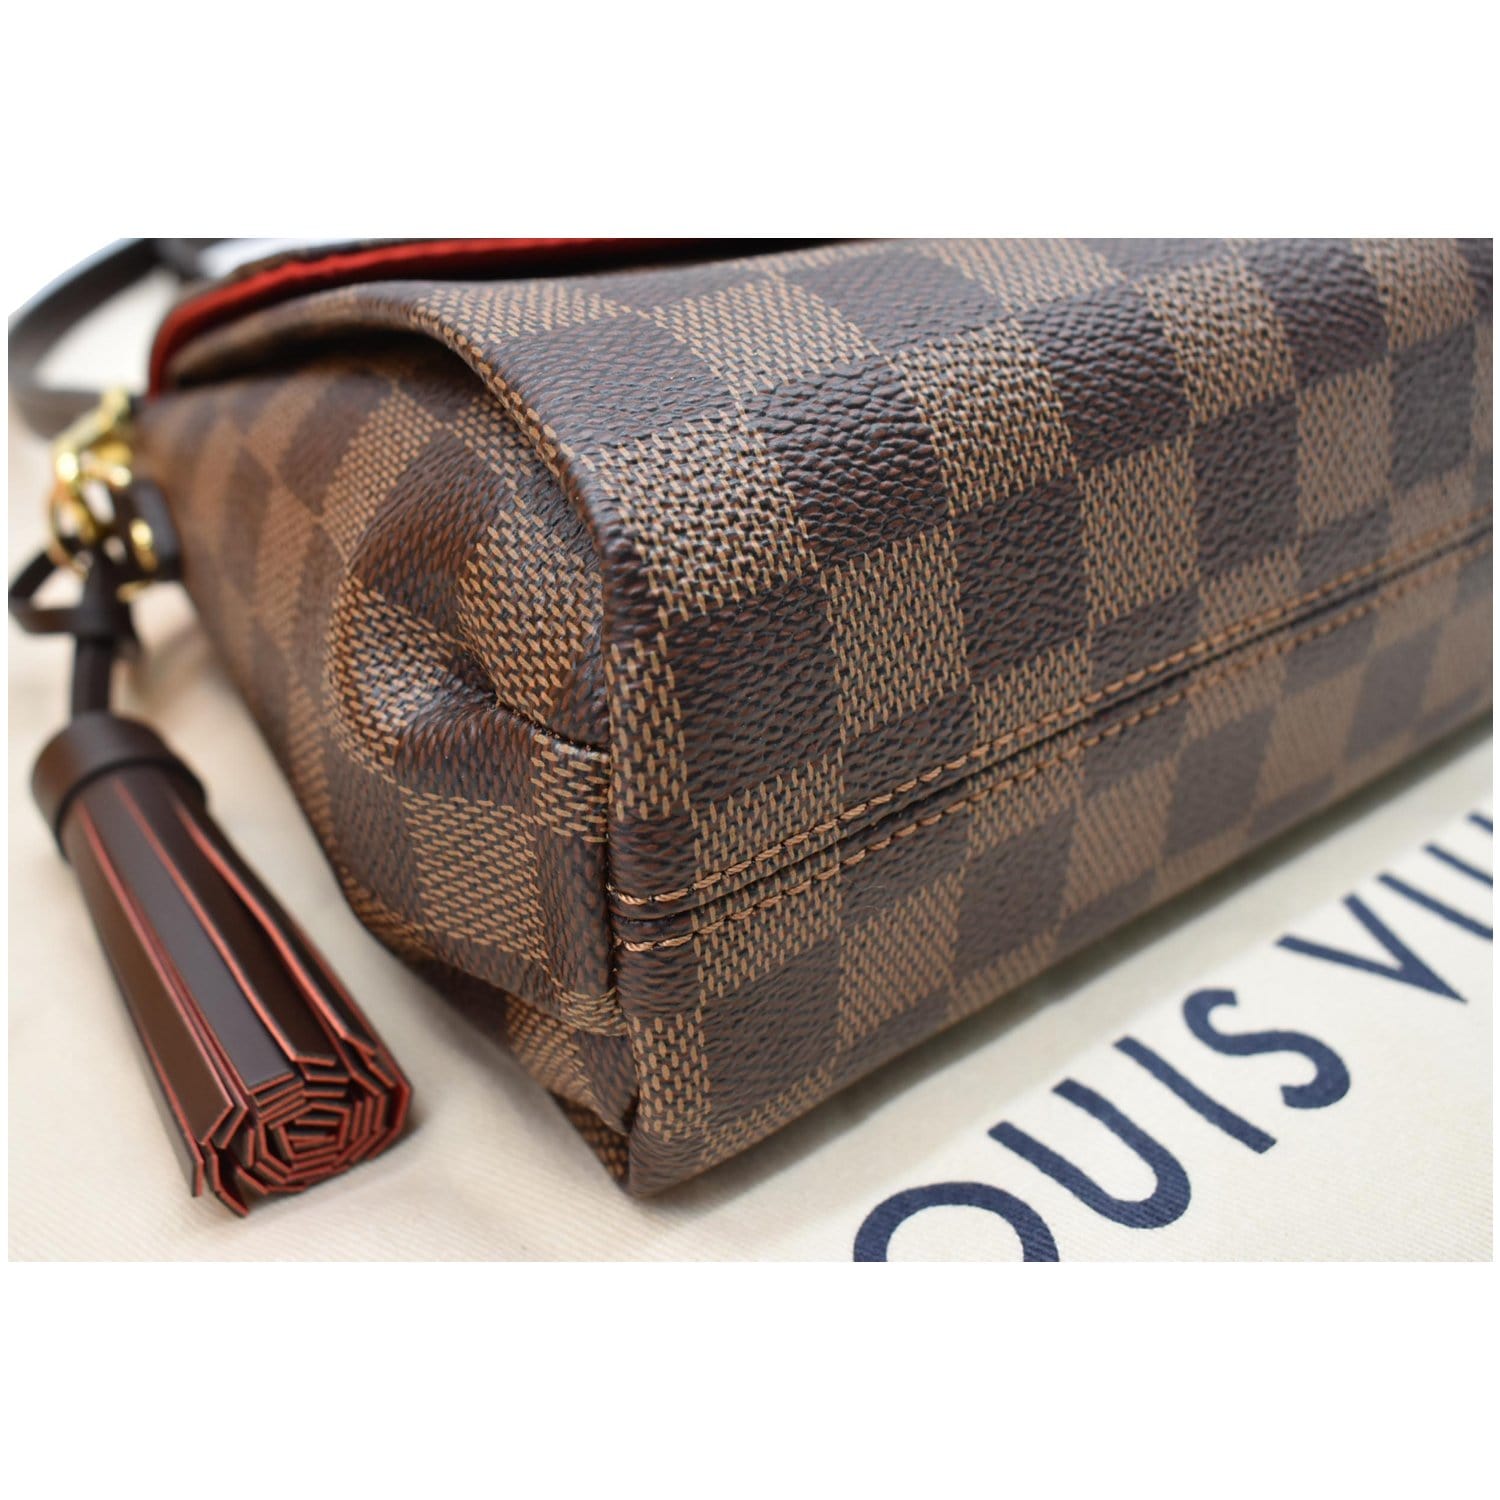 Louis Vuitton Croisette Crossbody bag in Damier Ebene Canvas